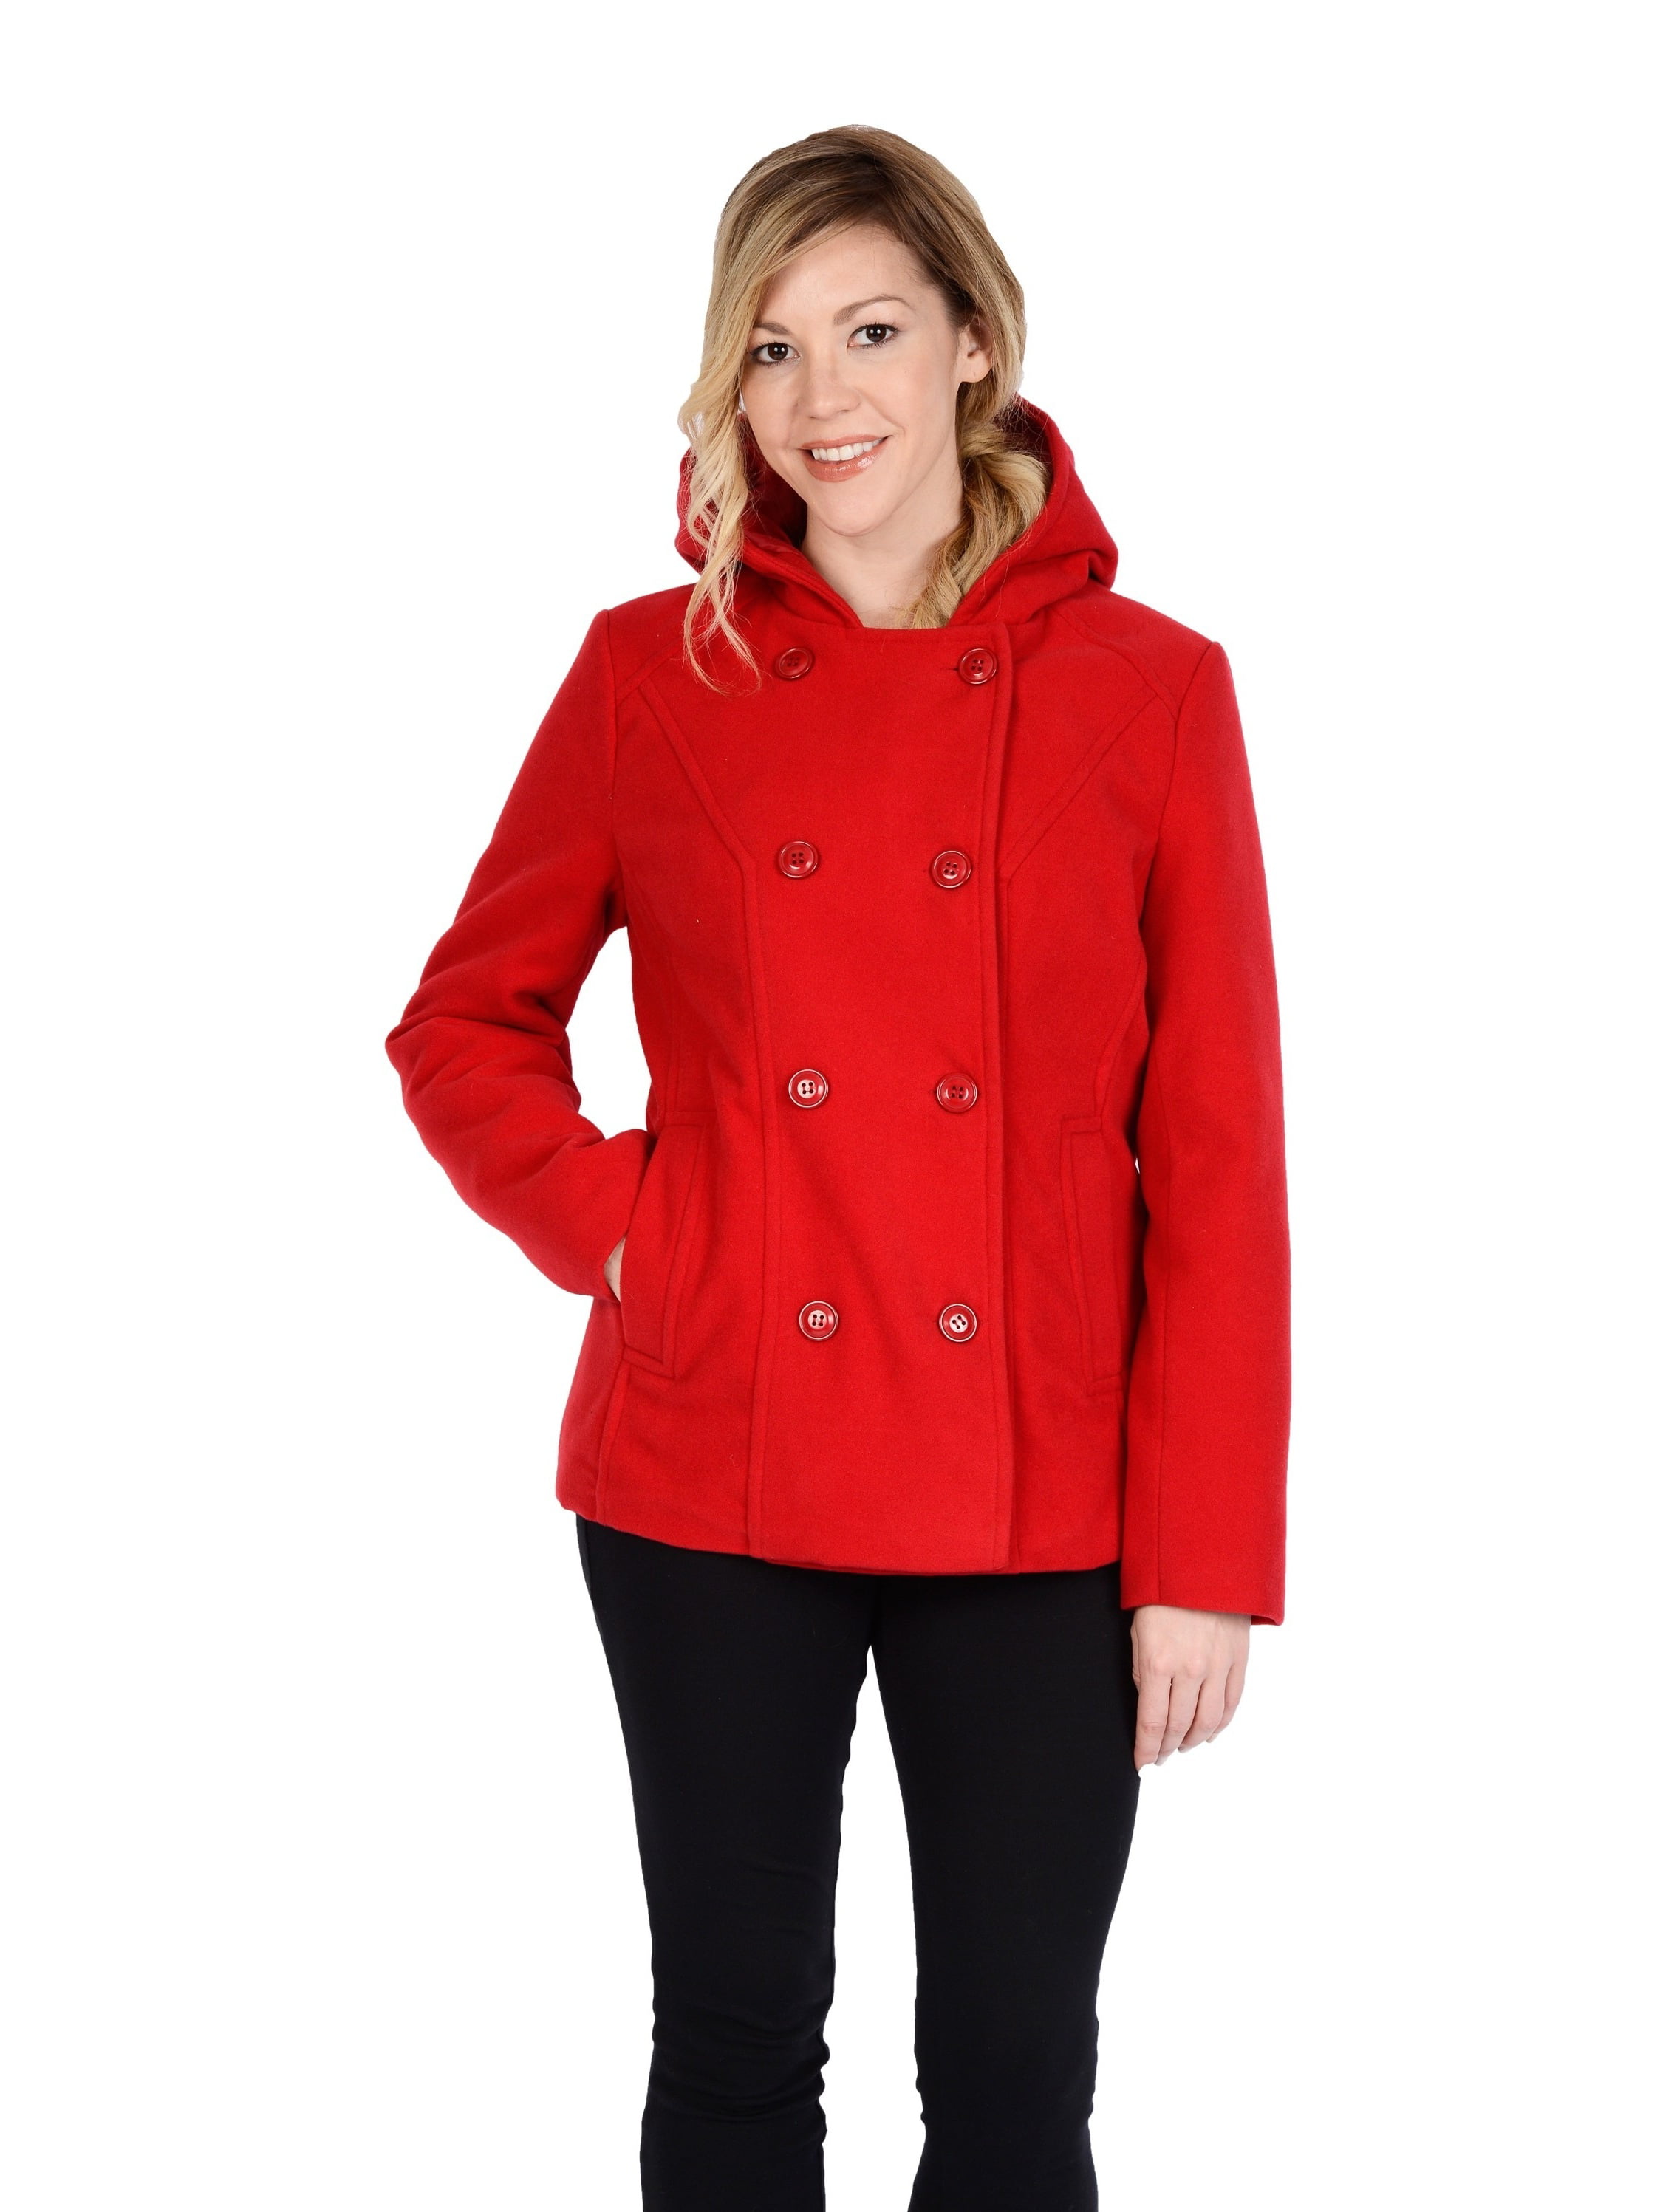 Women's Fashion Pea Coat With Hood - Walmart.com